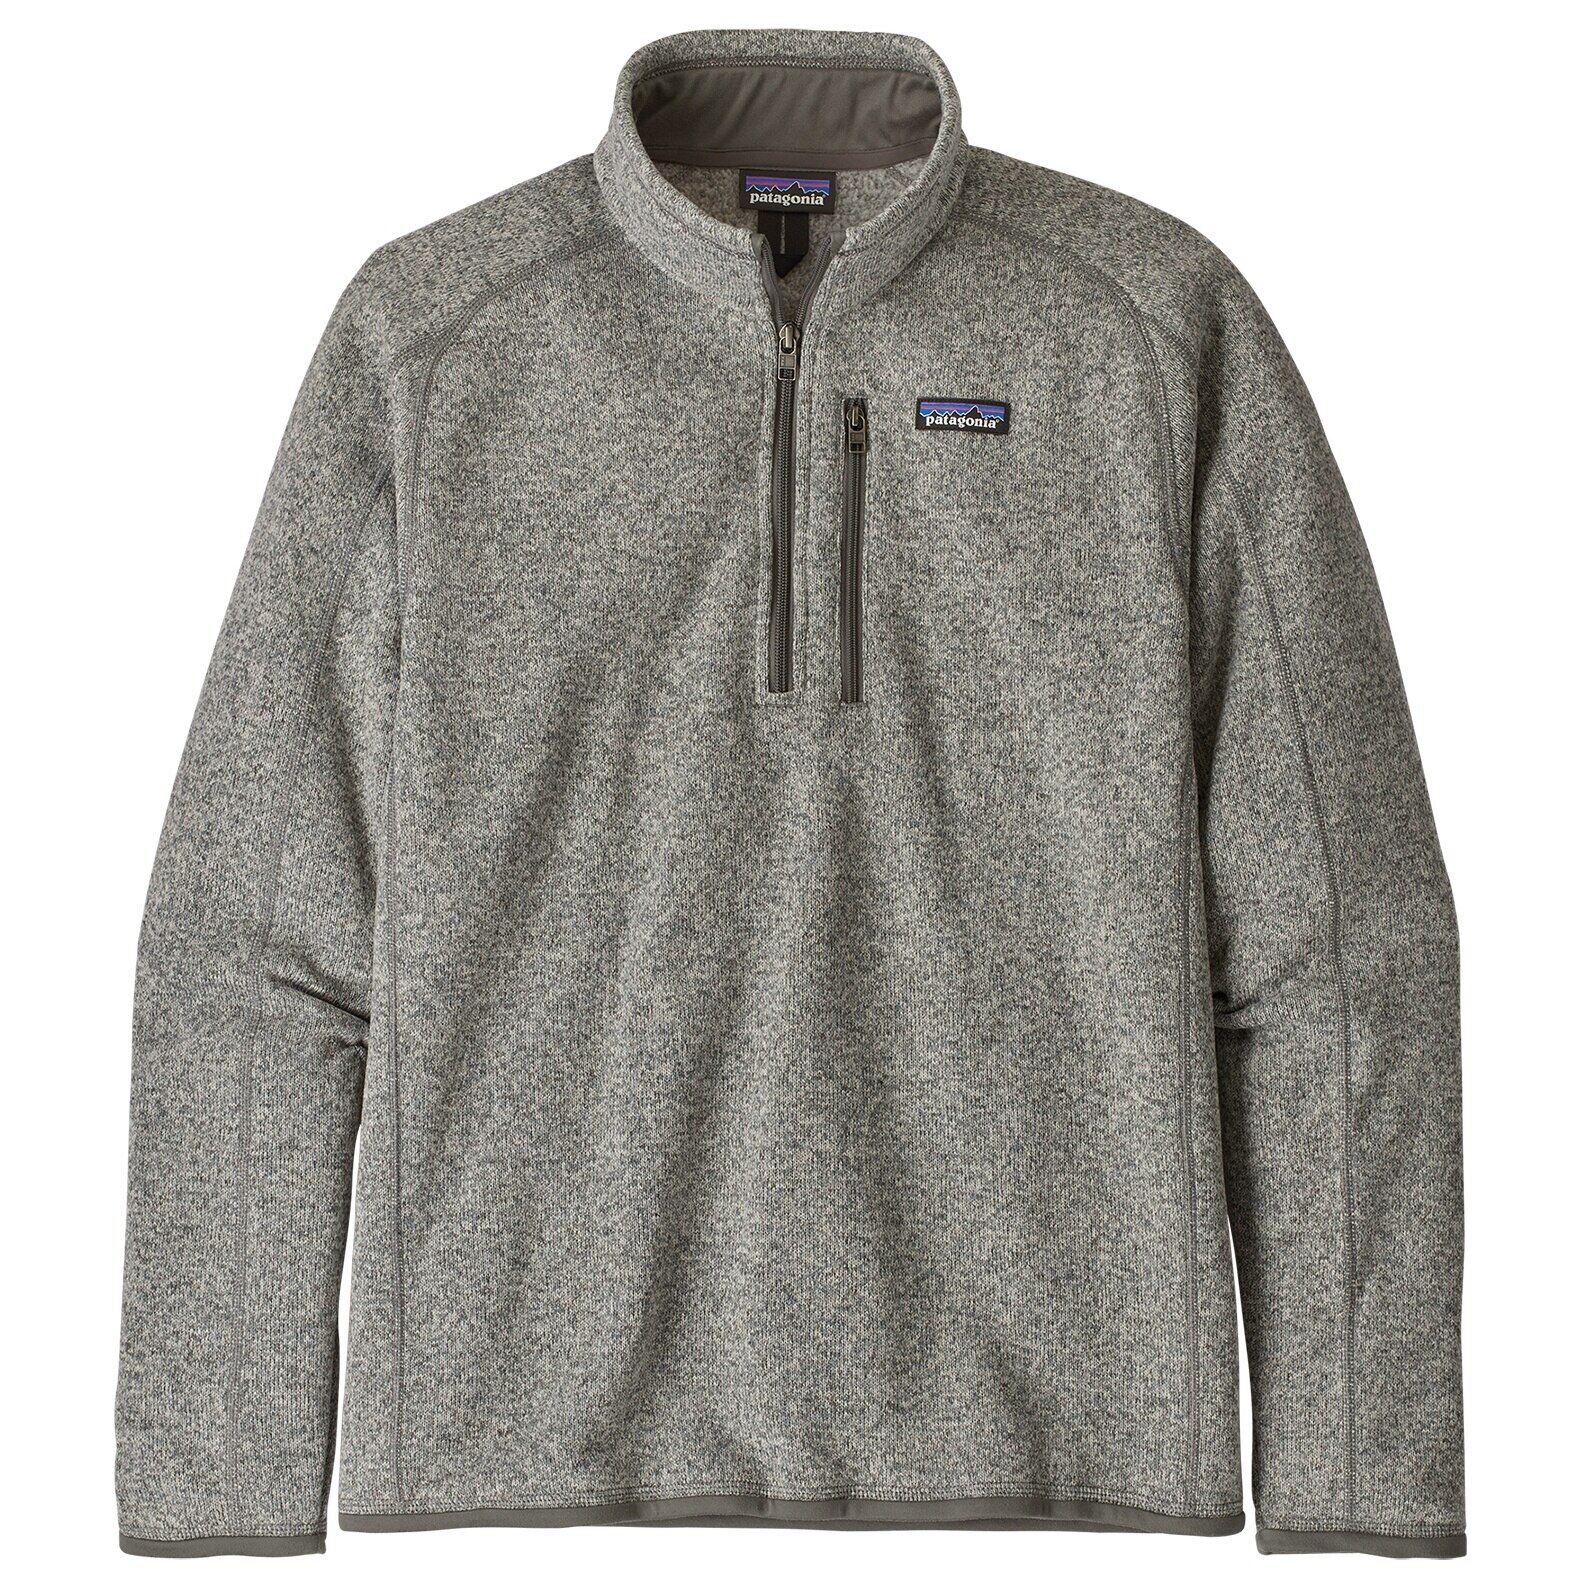 Patagonia Men's Better Sweater Quarter Zip on Sale - Powder7.com